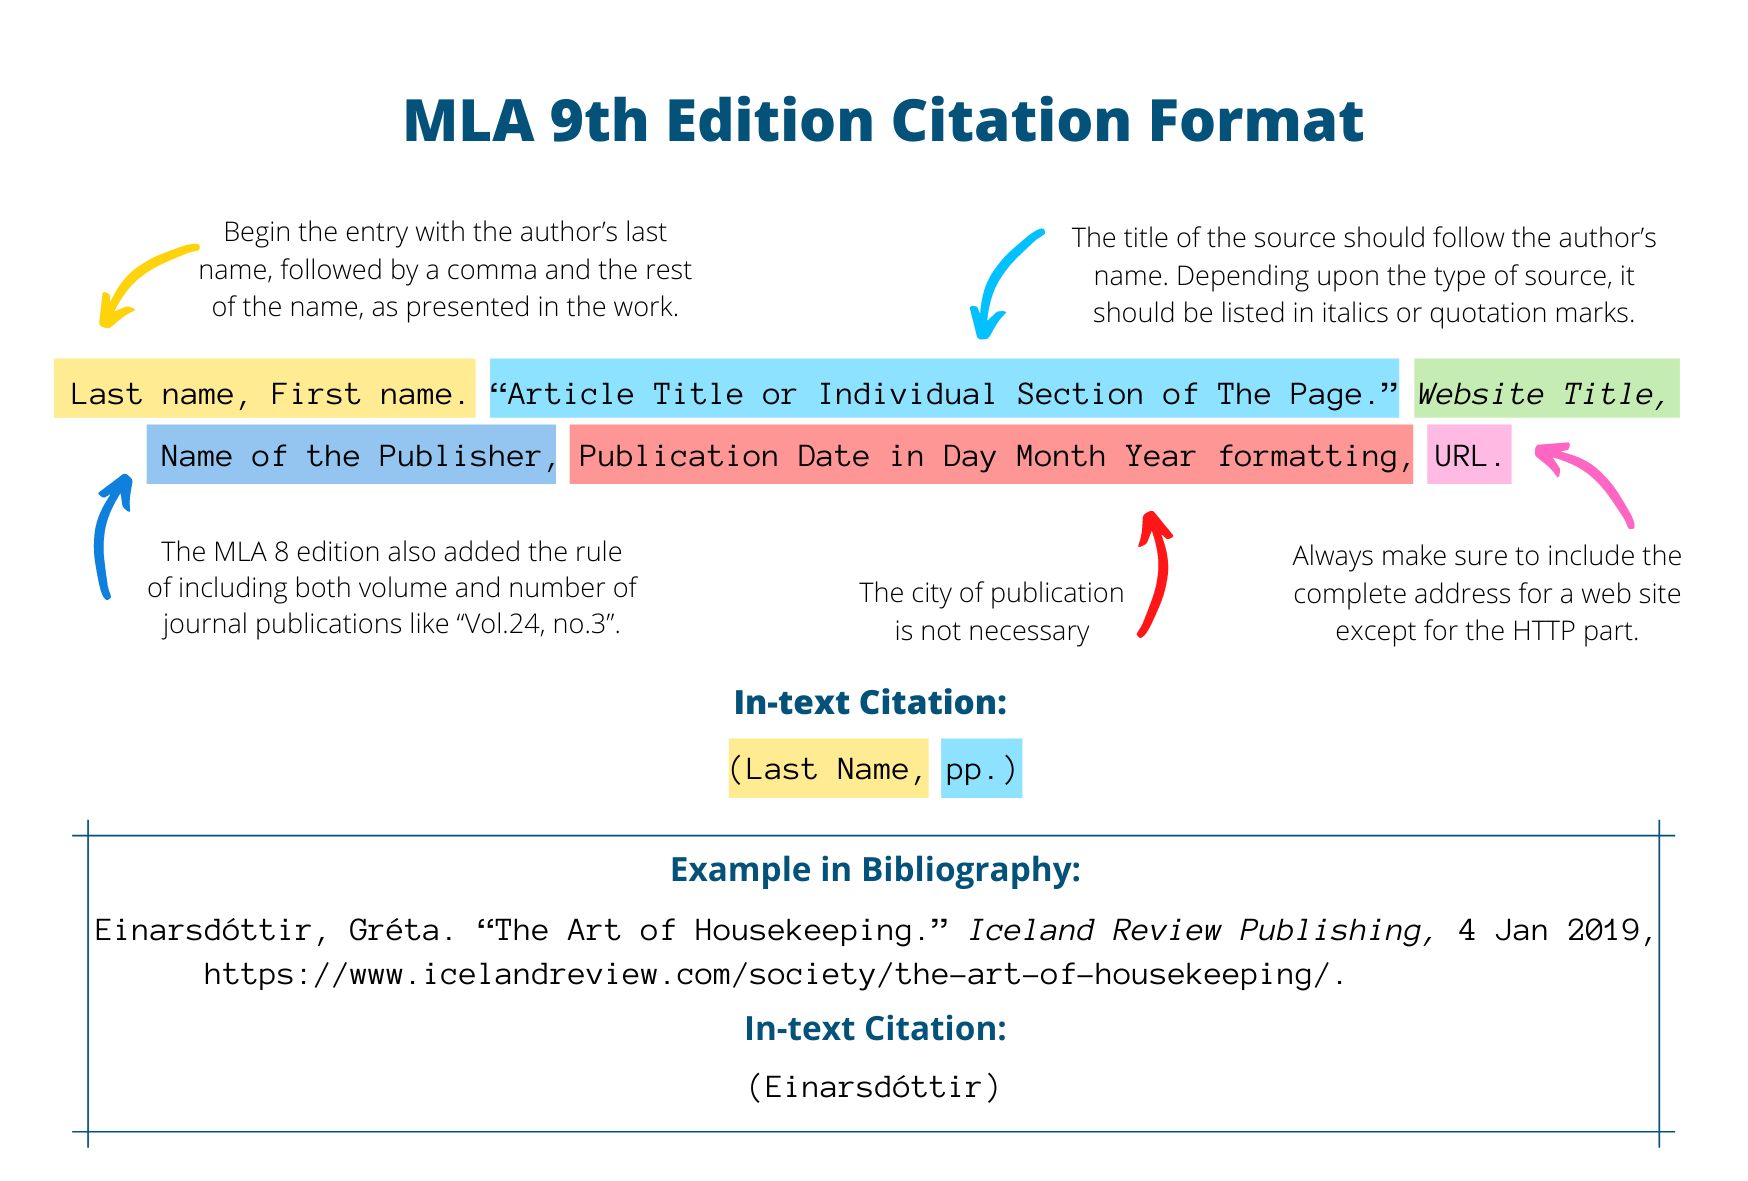 MLA 9th Citation example